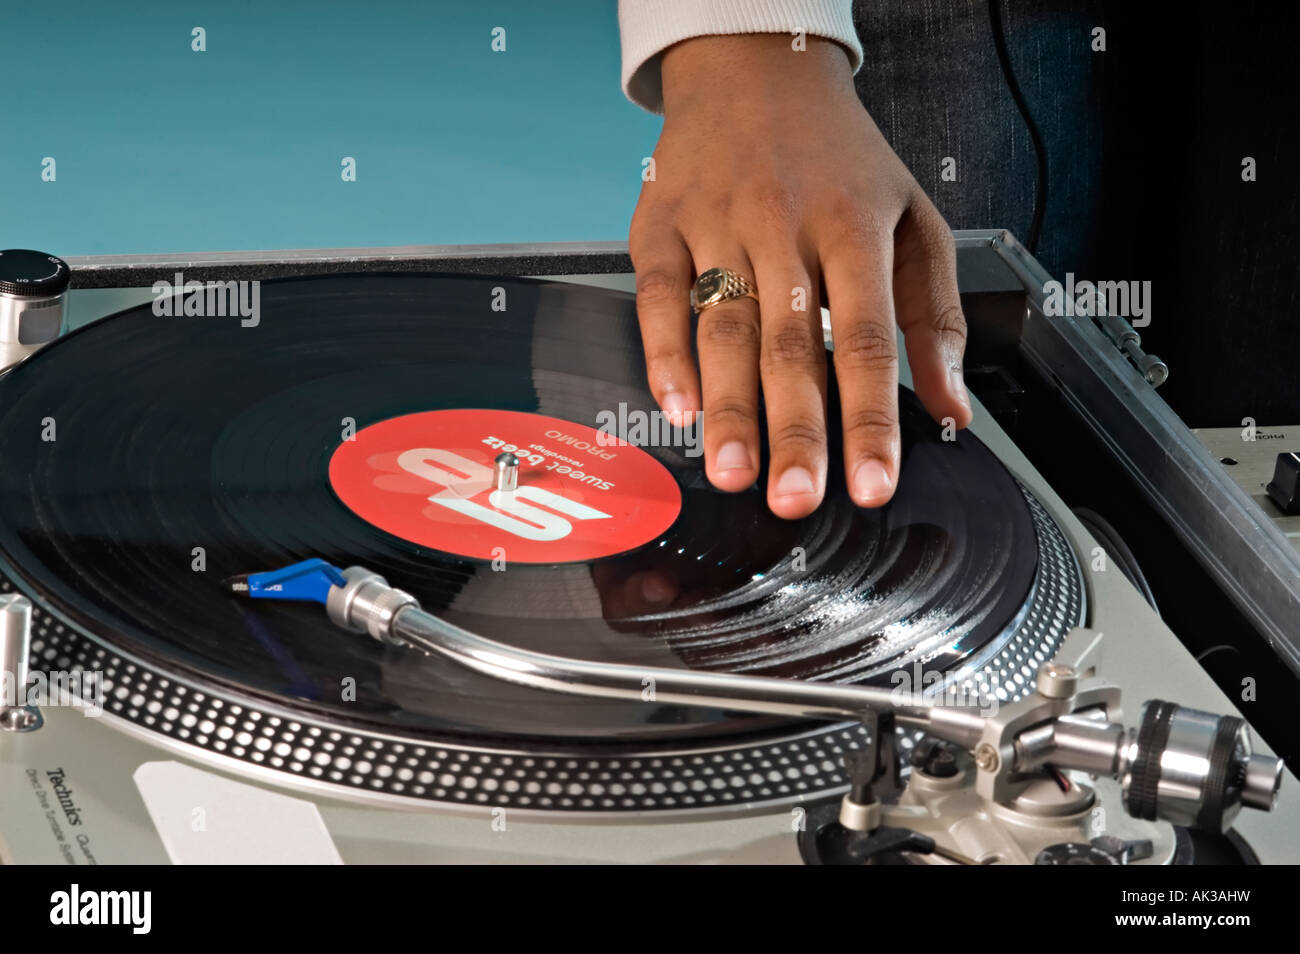 a dj mixing records on some decks Stock Photo